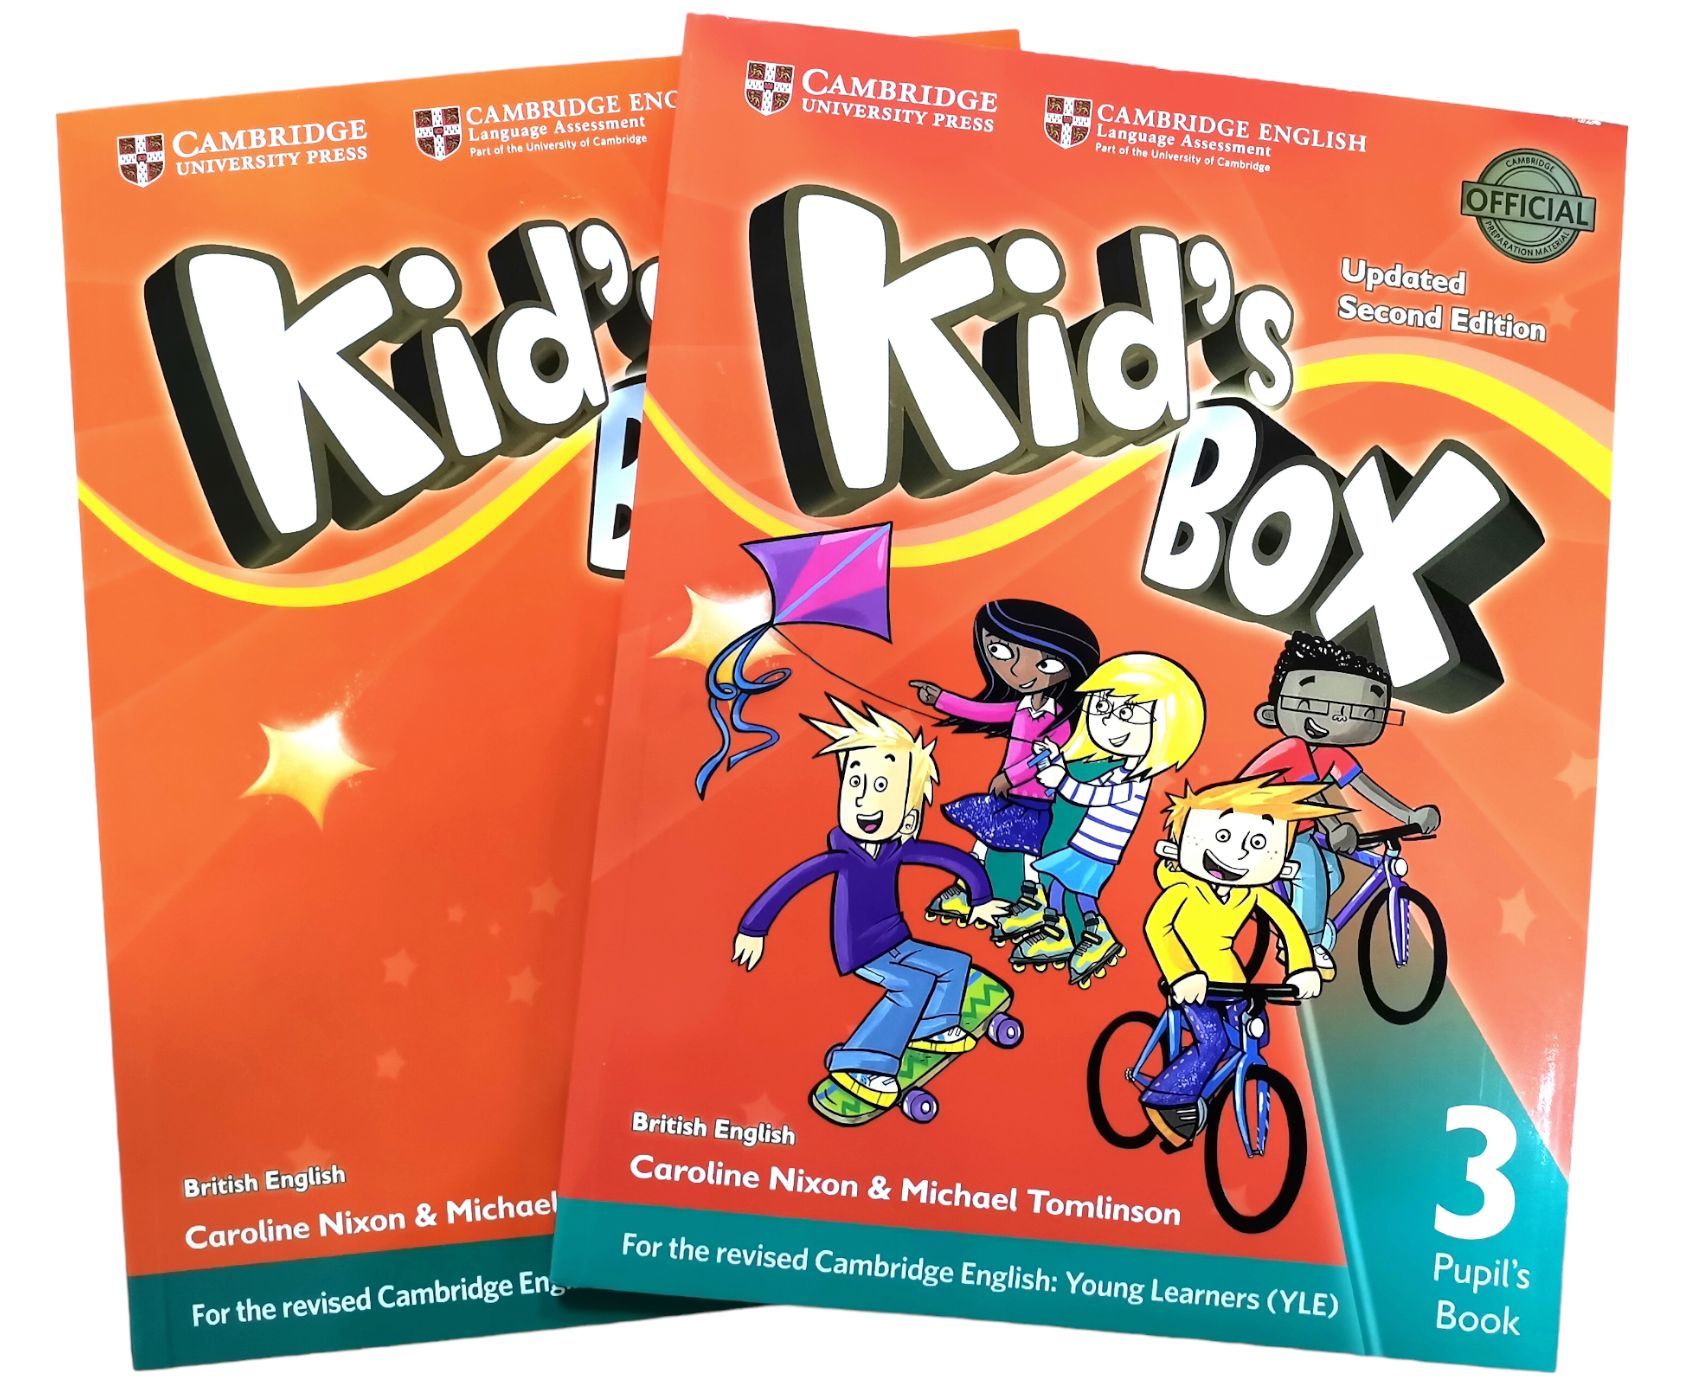 Kids box 2 pupils book. Kids Box 3 activity book. Kids Box 1 pupil's book. Игры и книжки Кидз бокс. DVD бук.